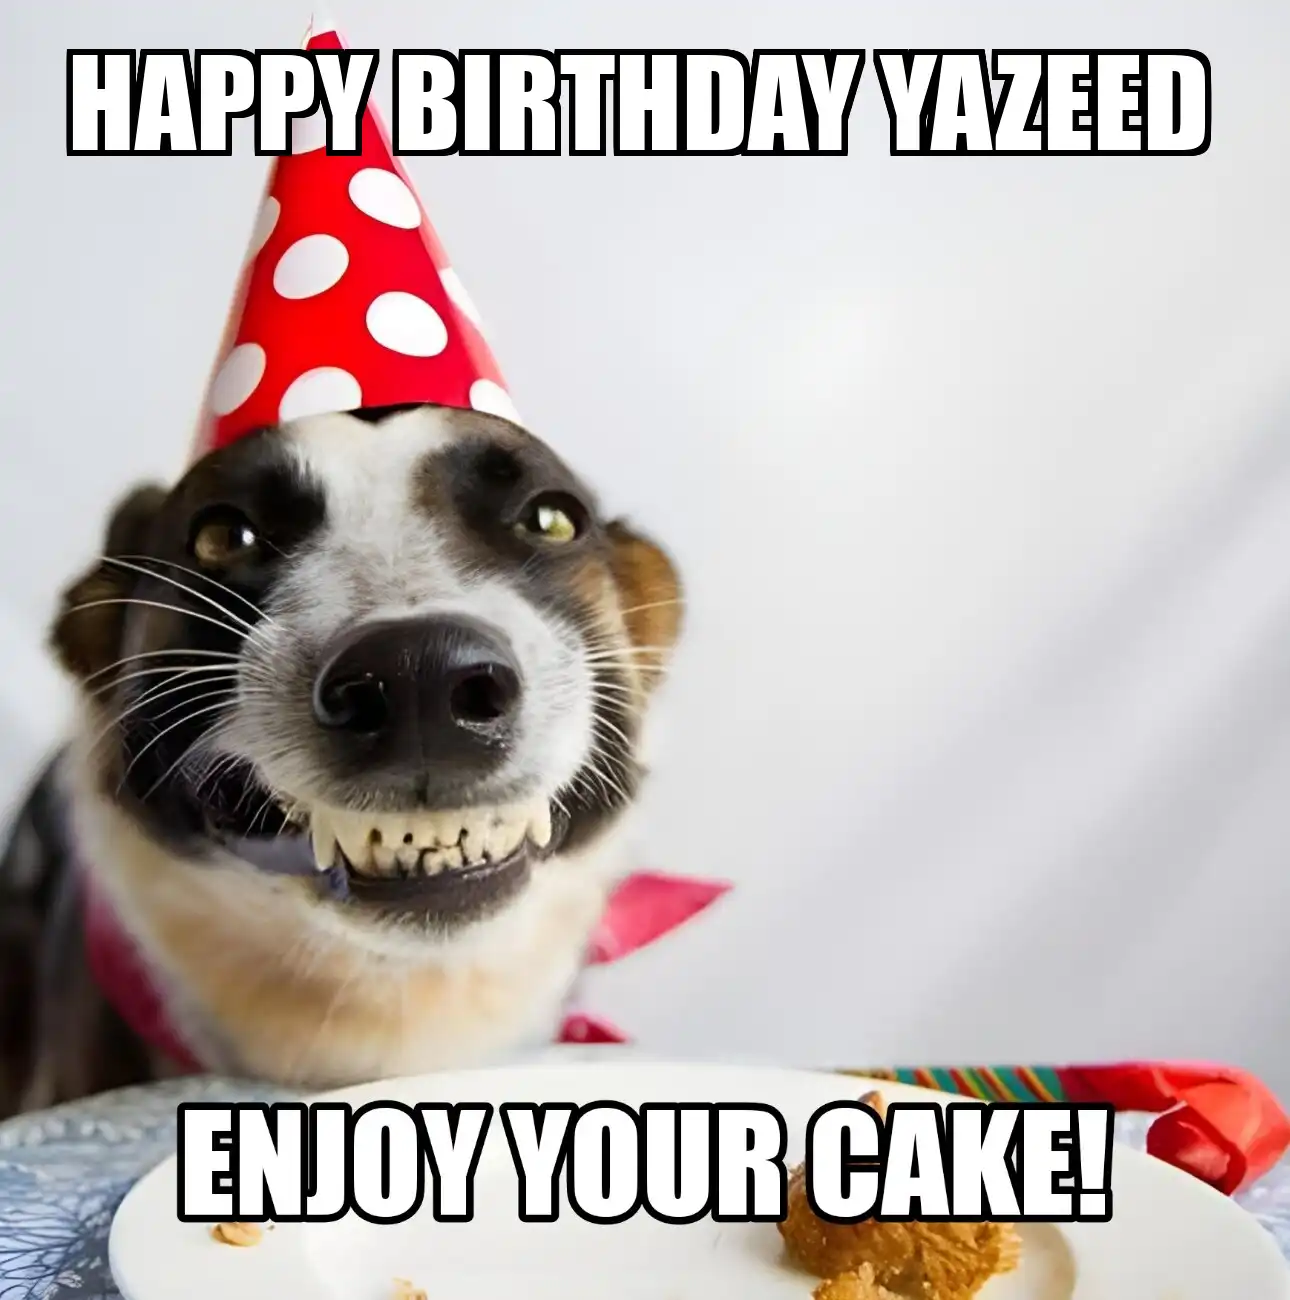 Happy Birthday Yazeed Enjoy Your Cake Dog Meme